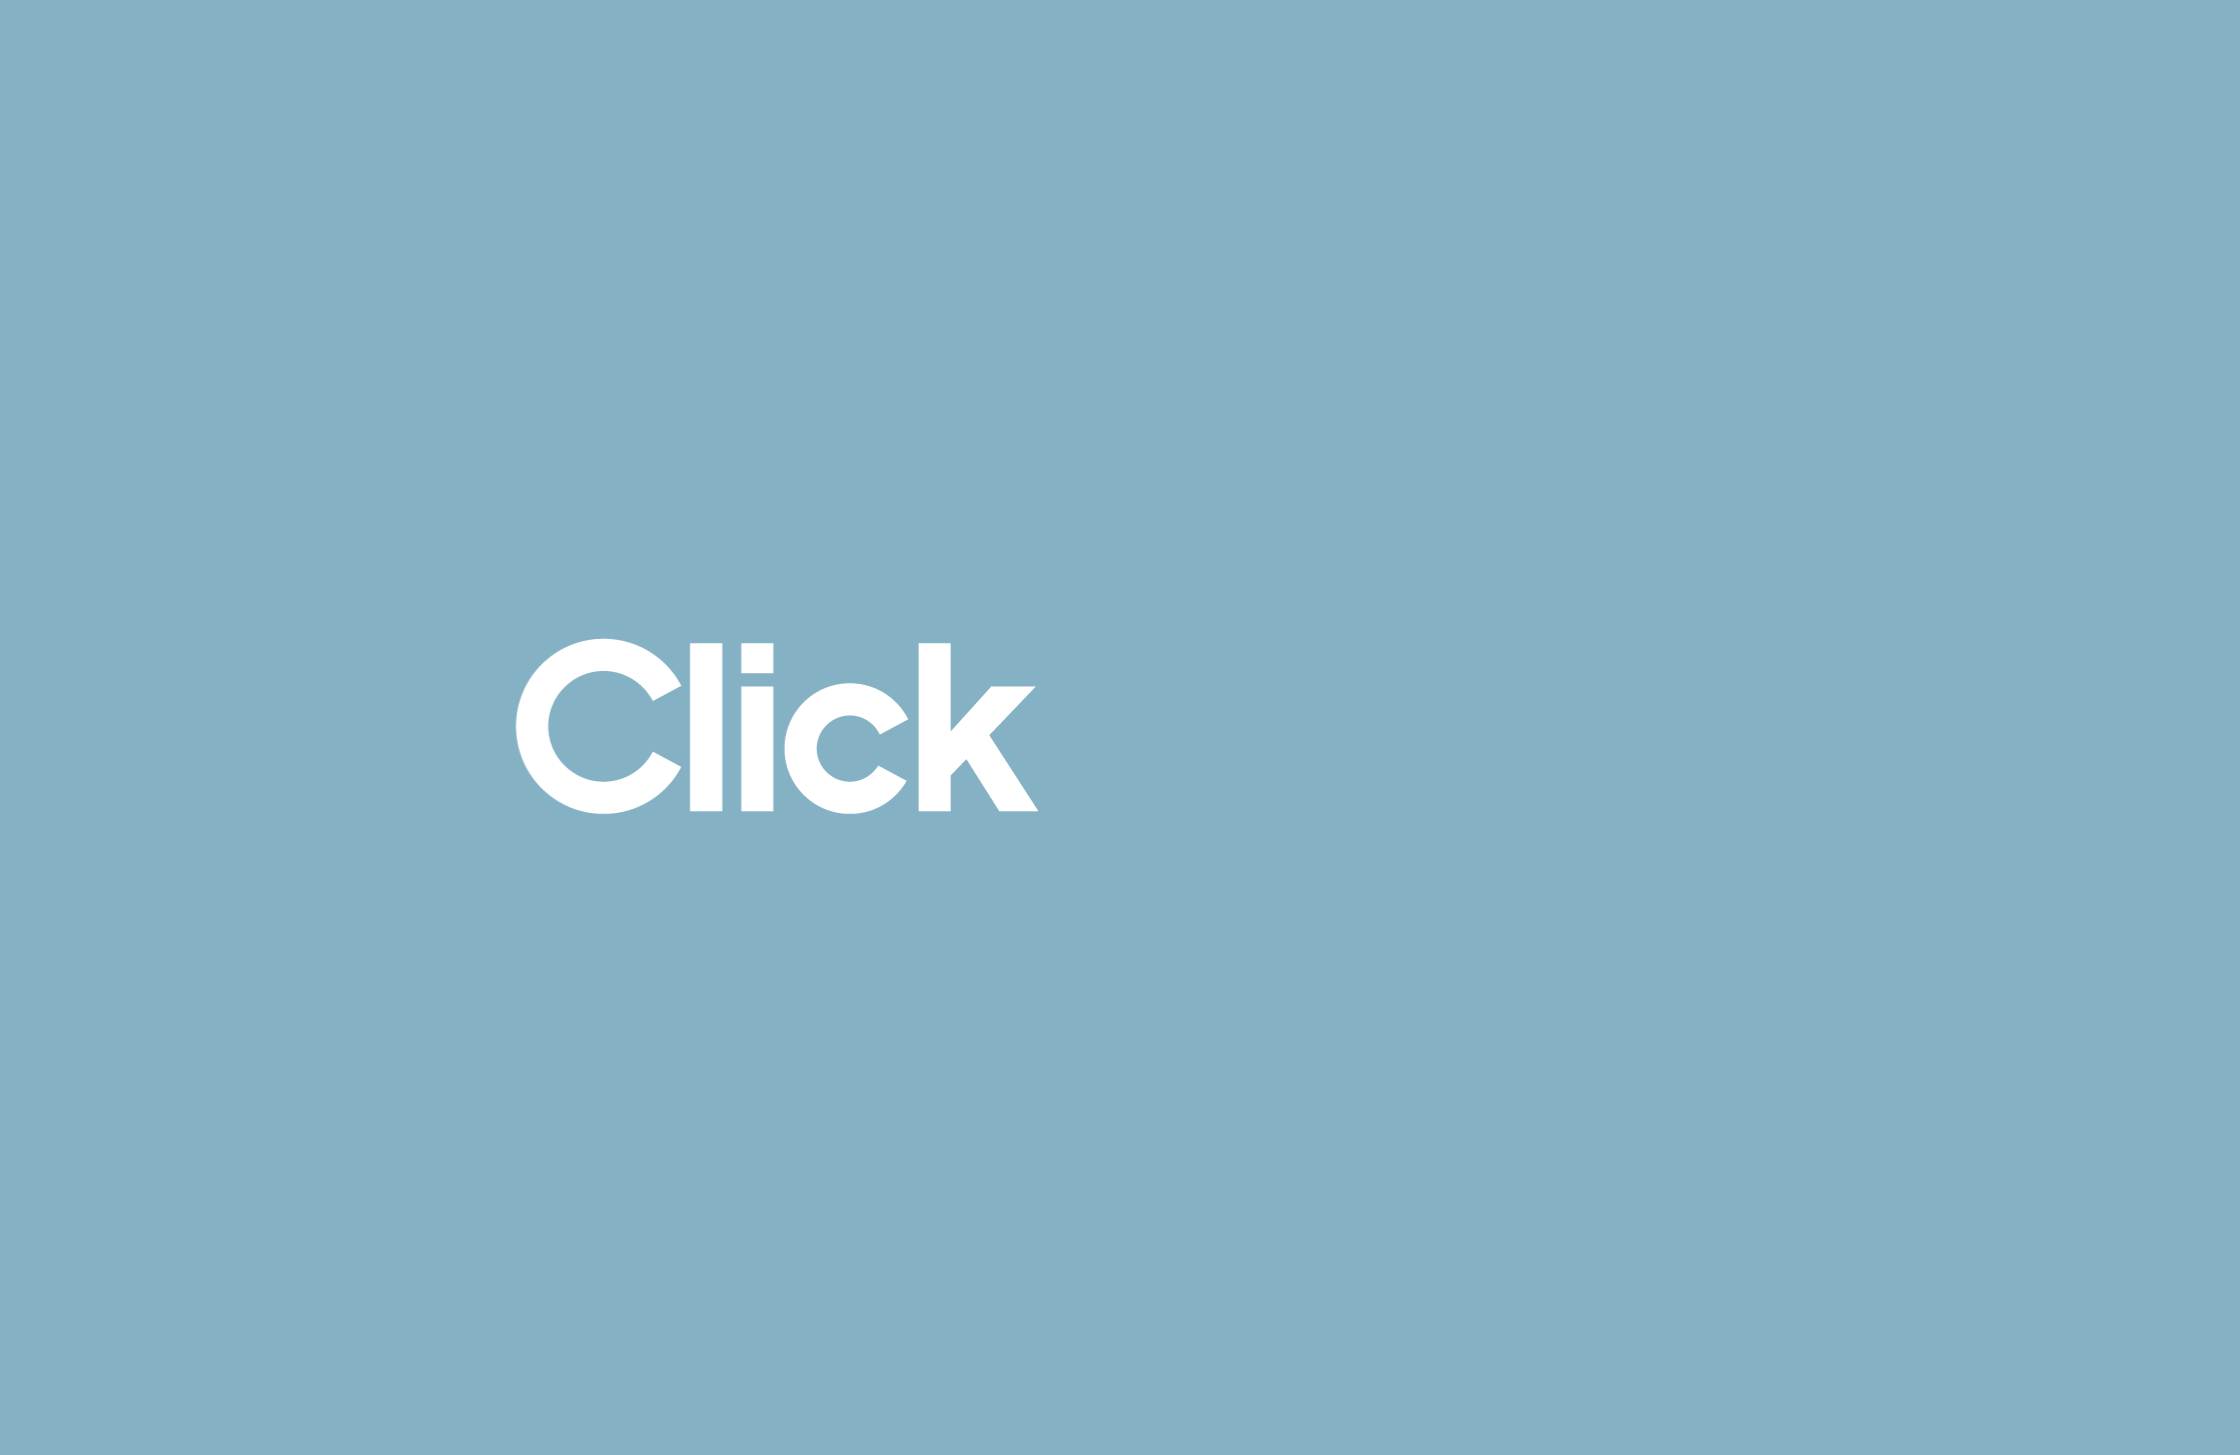 ClickClack image